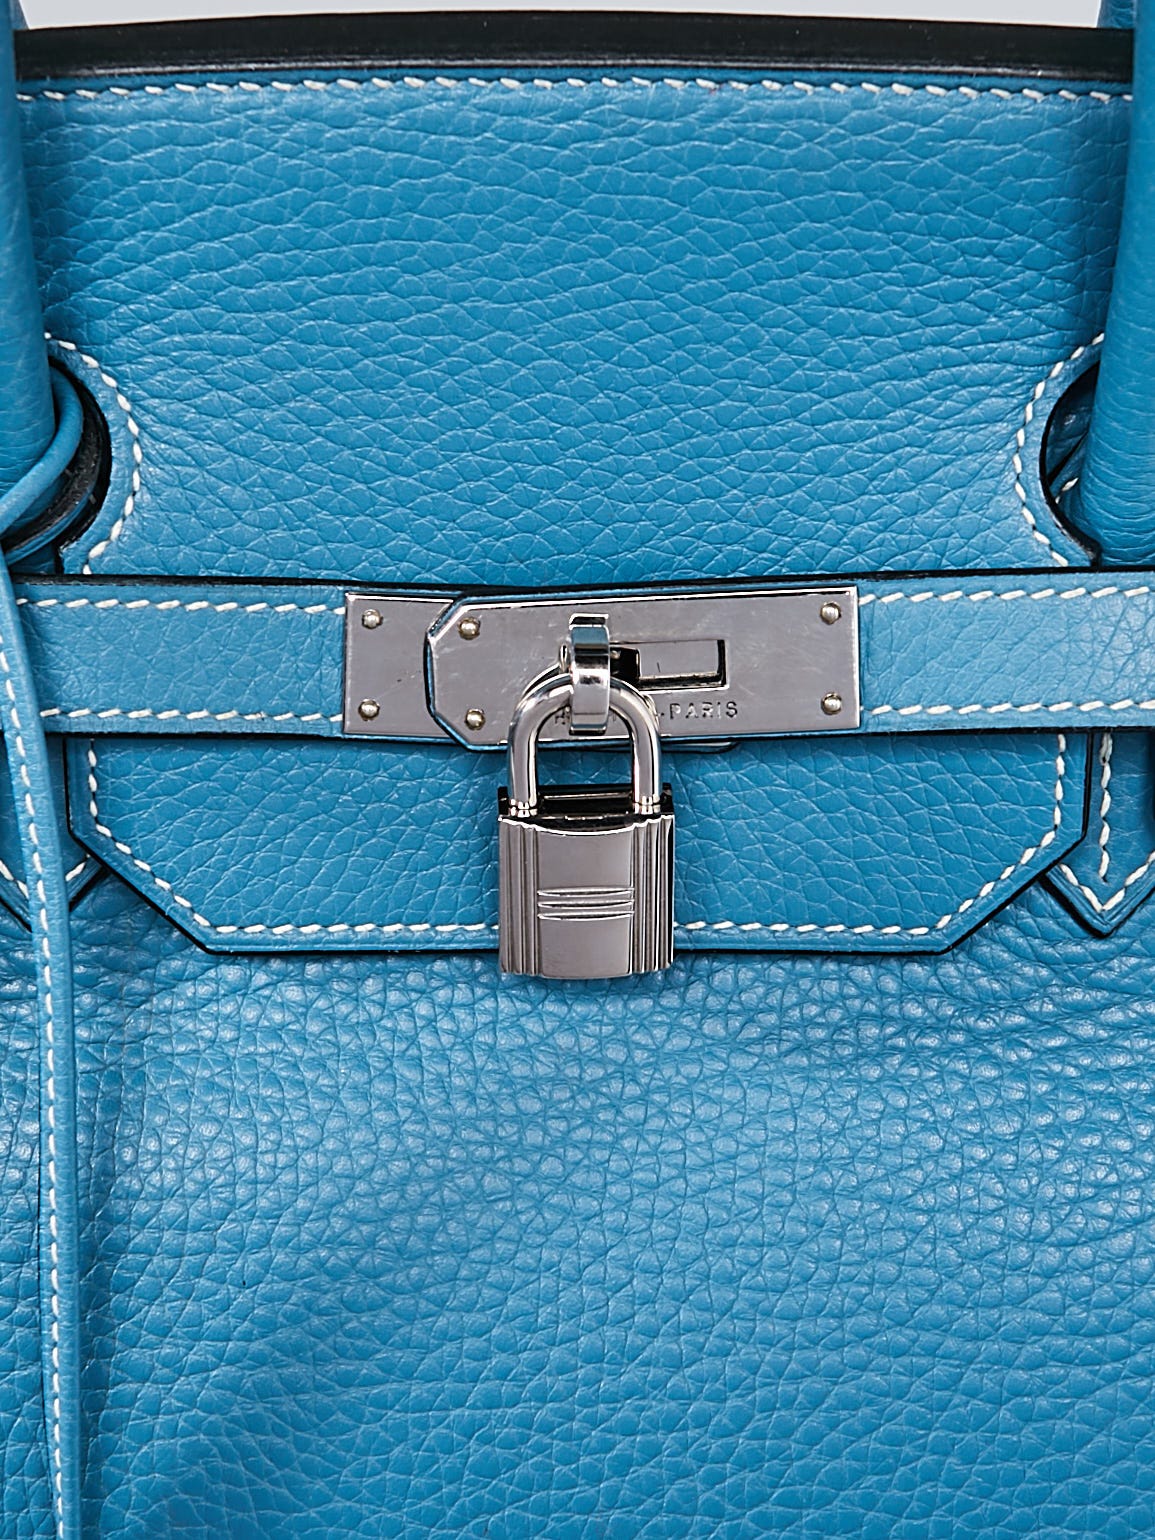 Hermes Blue Jean Clemence Birkin with Palladium Hardware 35cm (SZZX) 144010018106 RP/SA